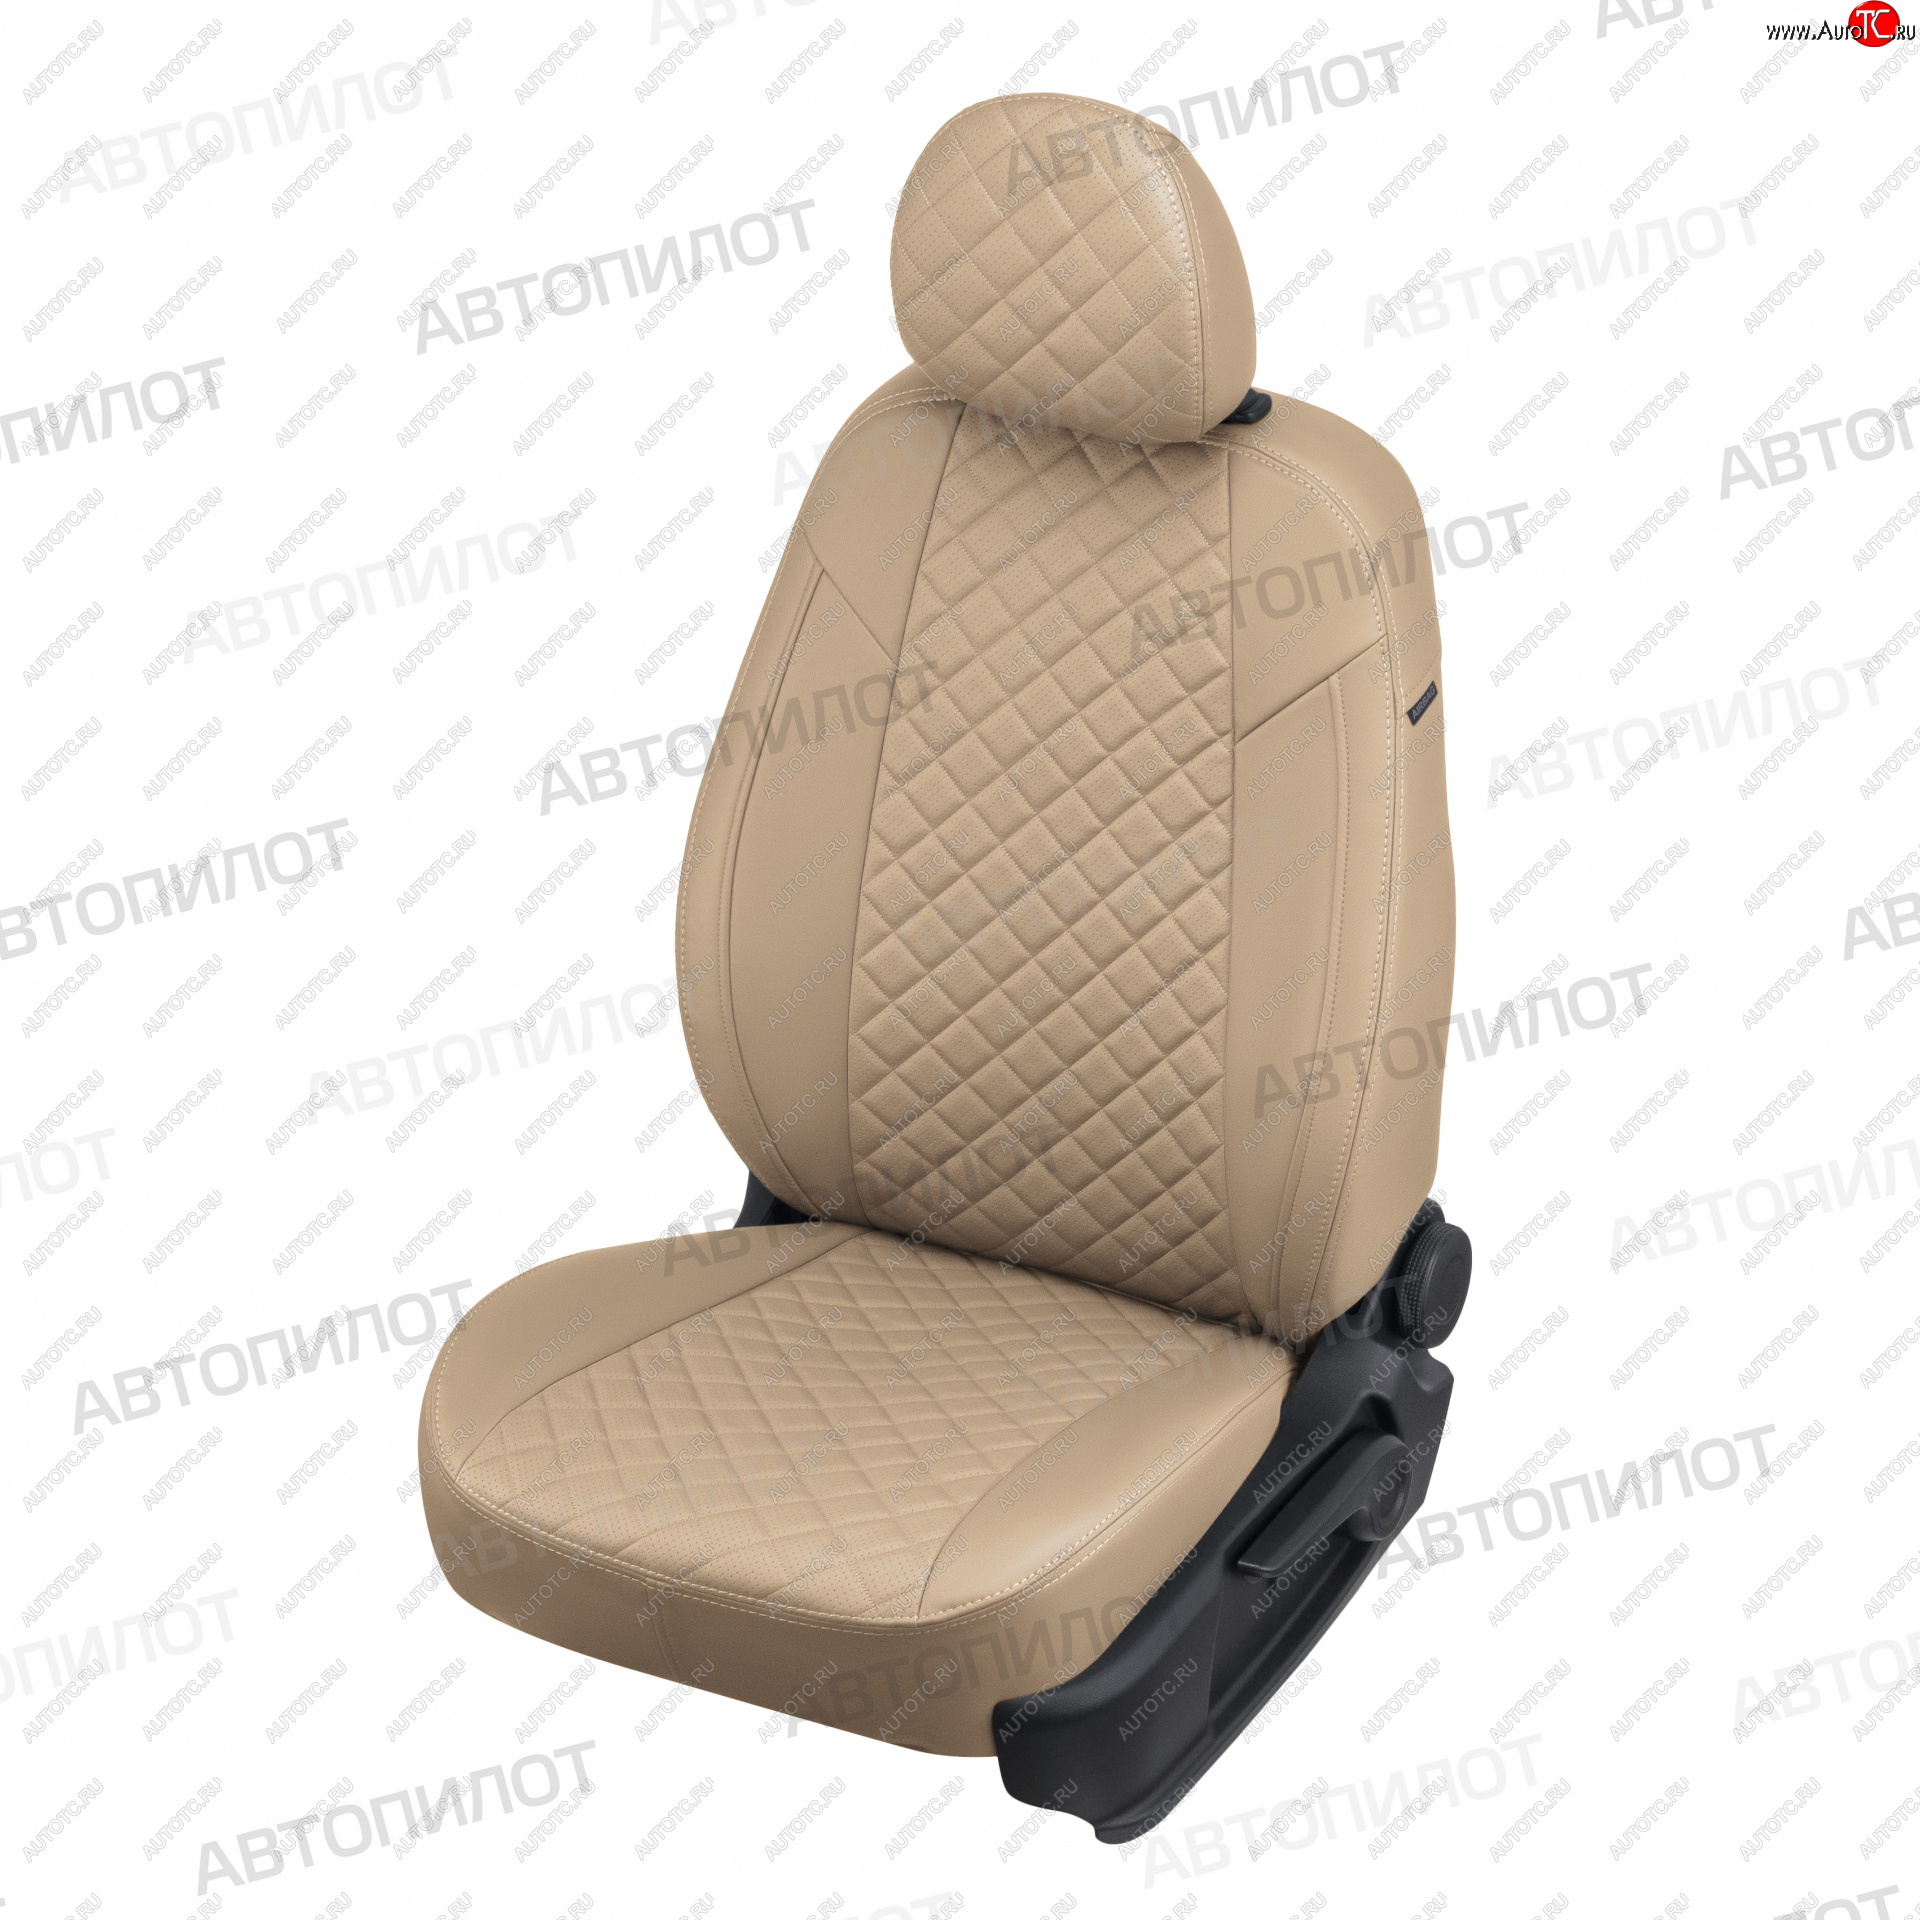 8 699 р. Чехлы сидений (3 места, экокожа) Автопилот Ромб  Ford Transit  3 (2006-2014) (темно-бежевый)